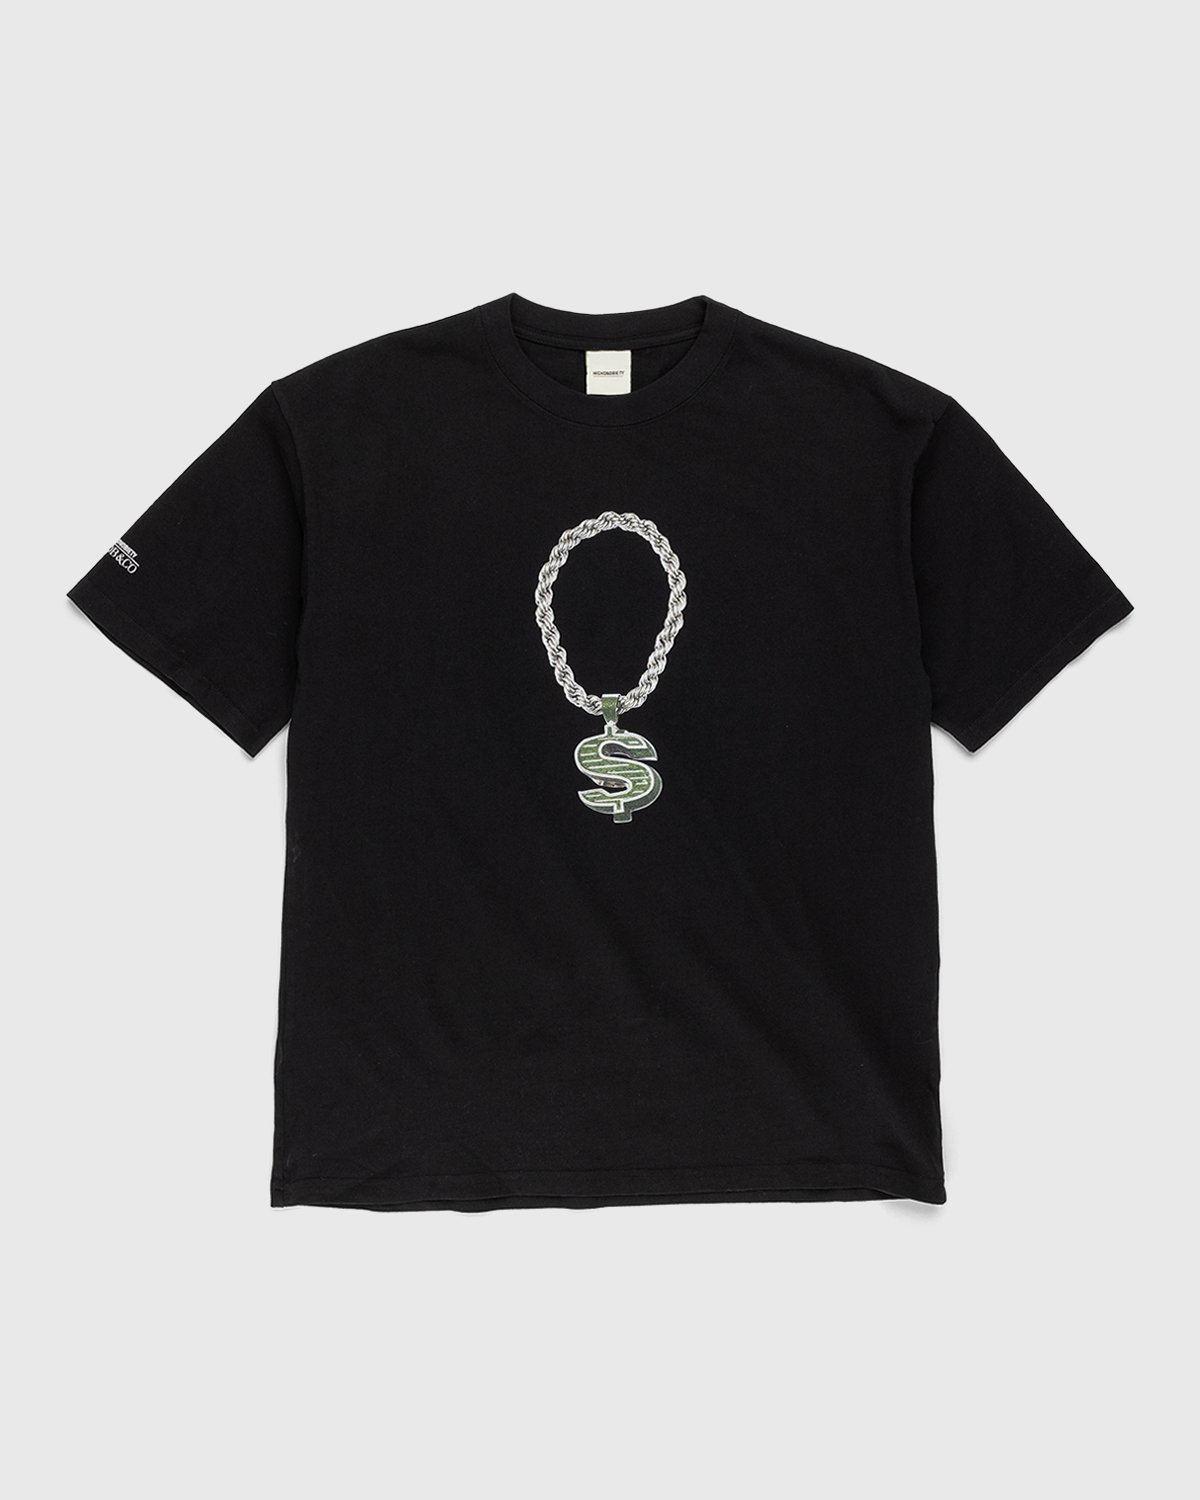 Jacob & Co. x Highsnobiety - Dollar Sign Pendant T-Shirt Black - Clothing - Black - Image 1